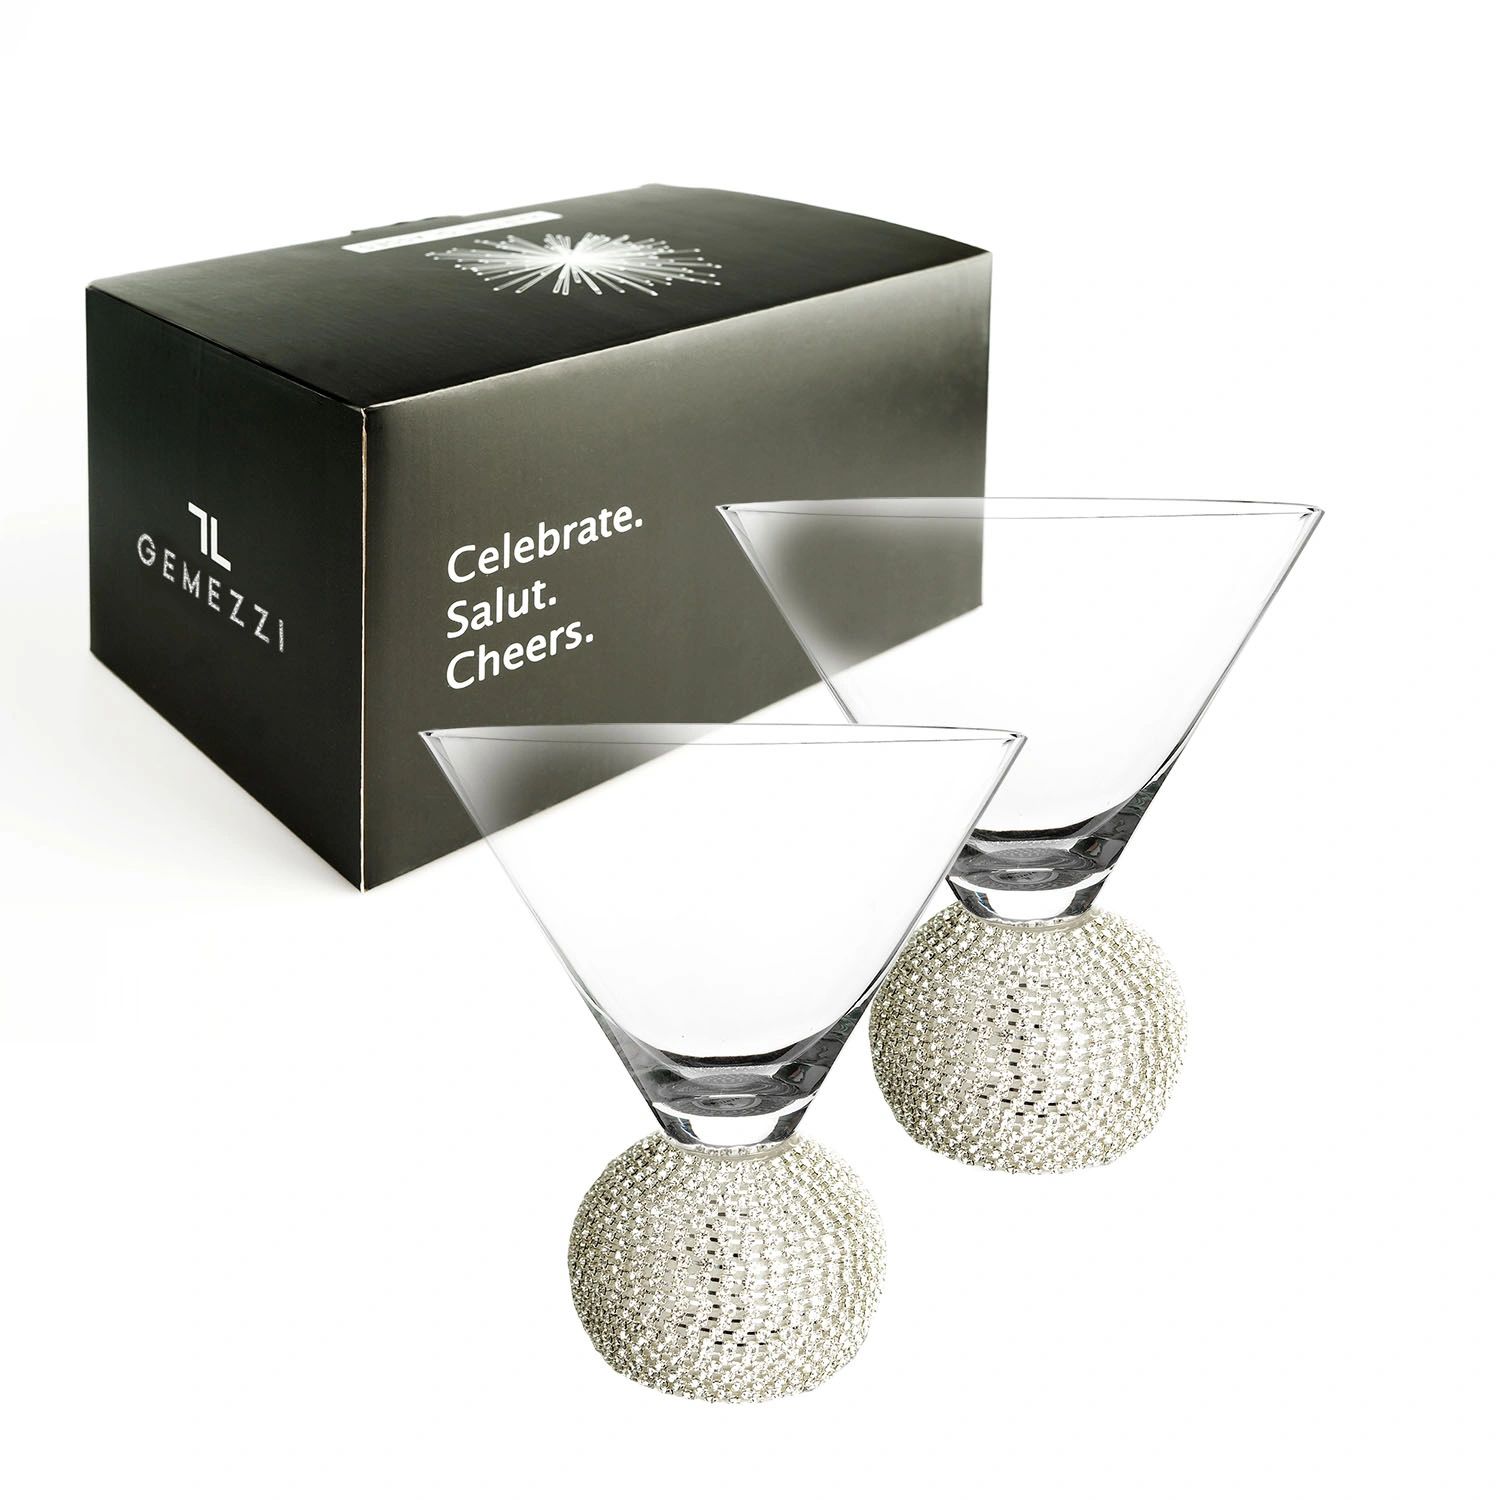 GEMEZZI Stemless Martini Glasses Set of 2, Silver Stemless Modern Cocktail  Glass, Crystal Ball Base …See more GEMEZZI Stemless Martini Glasses Set of